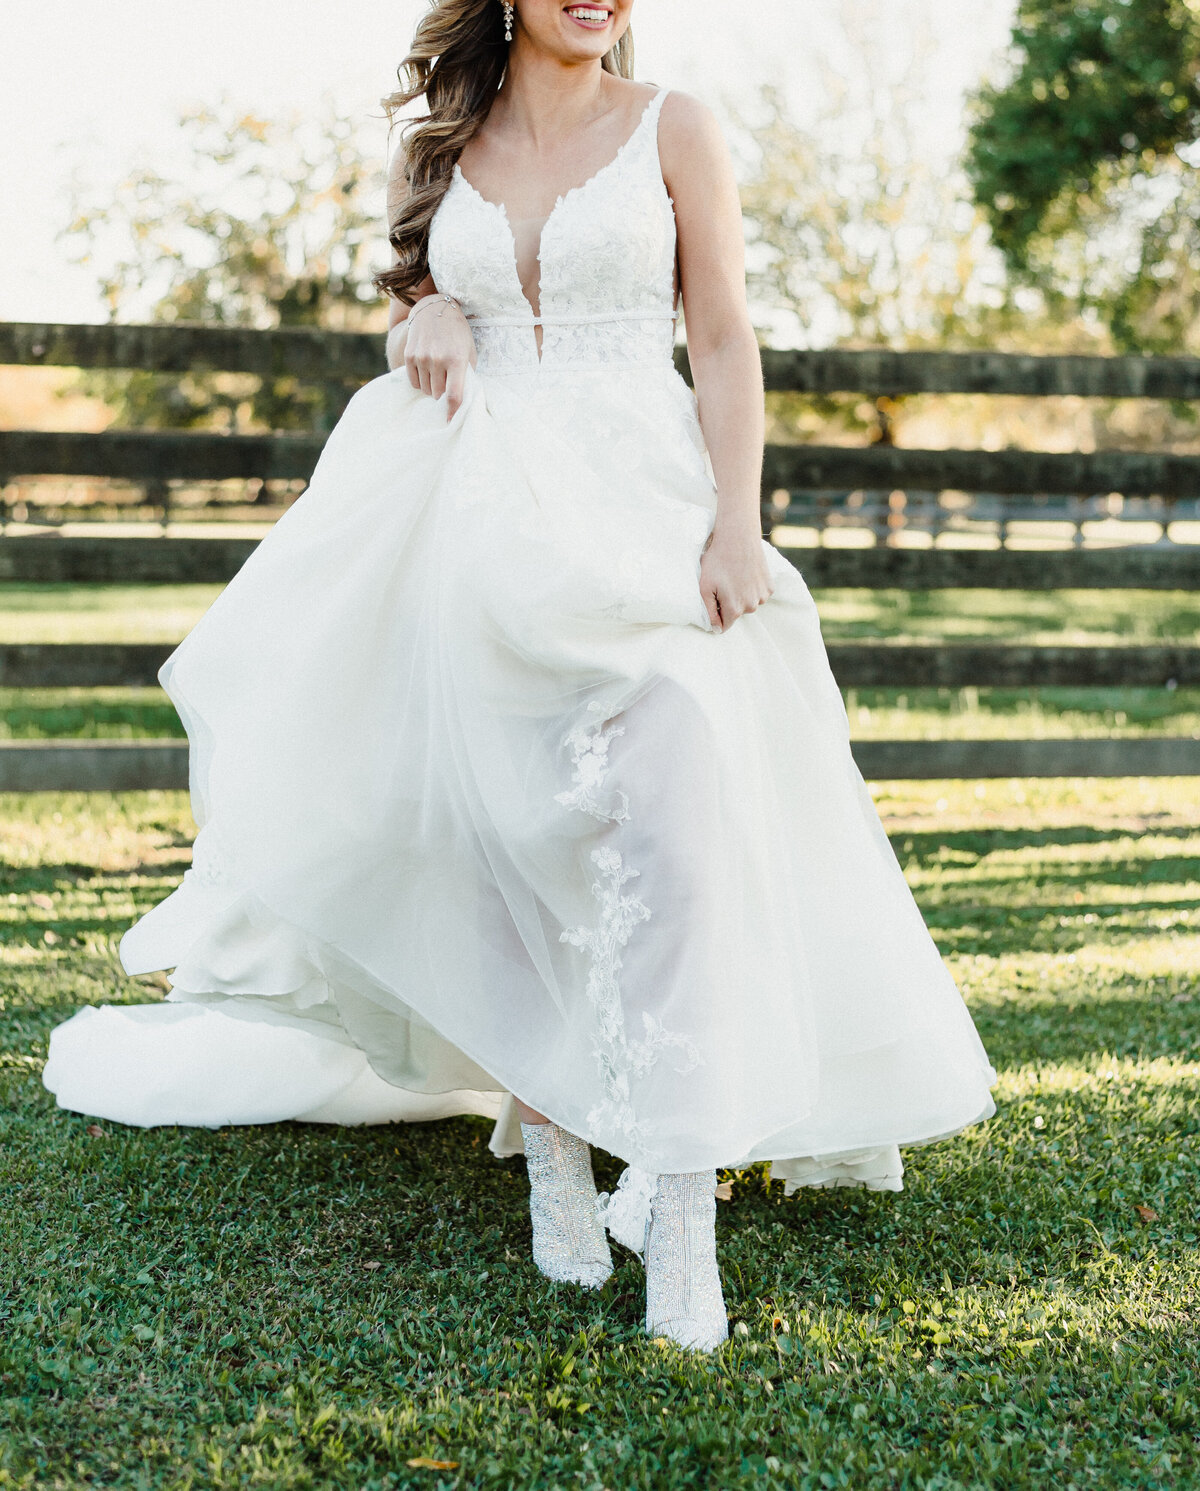 Copyright-Dewitt-for-Love-Photography-B+L-Southern-Grace-Barn-Wedding-Photographer-Florida-167